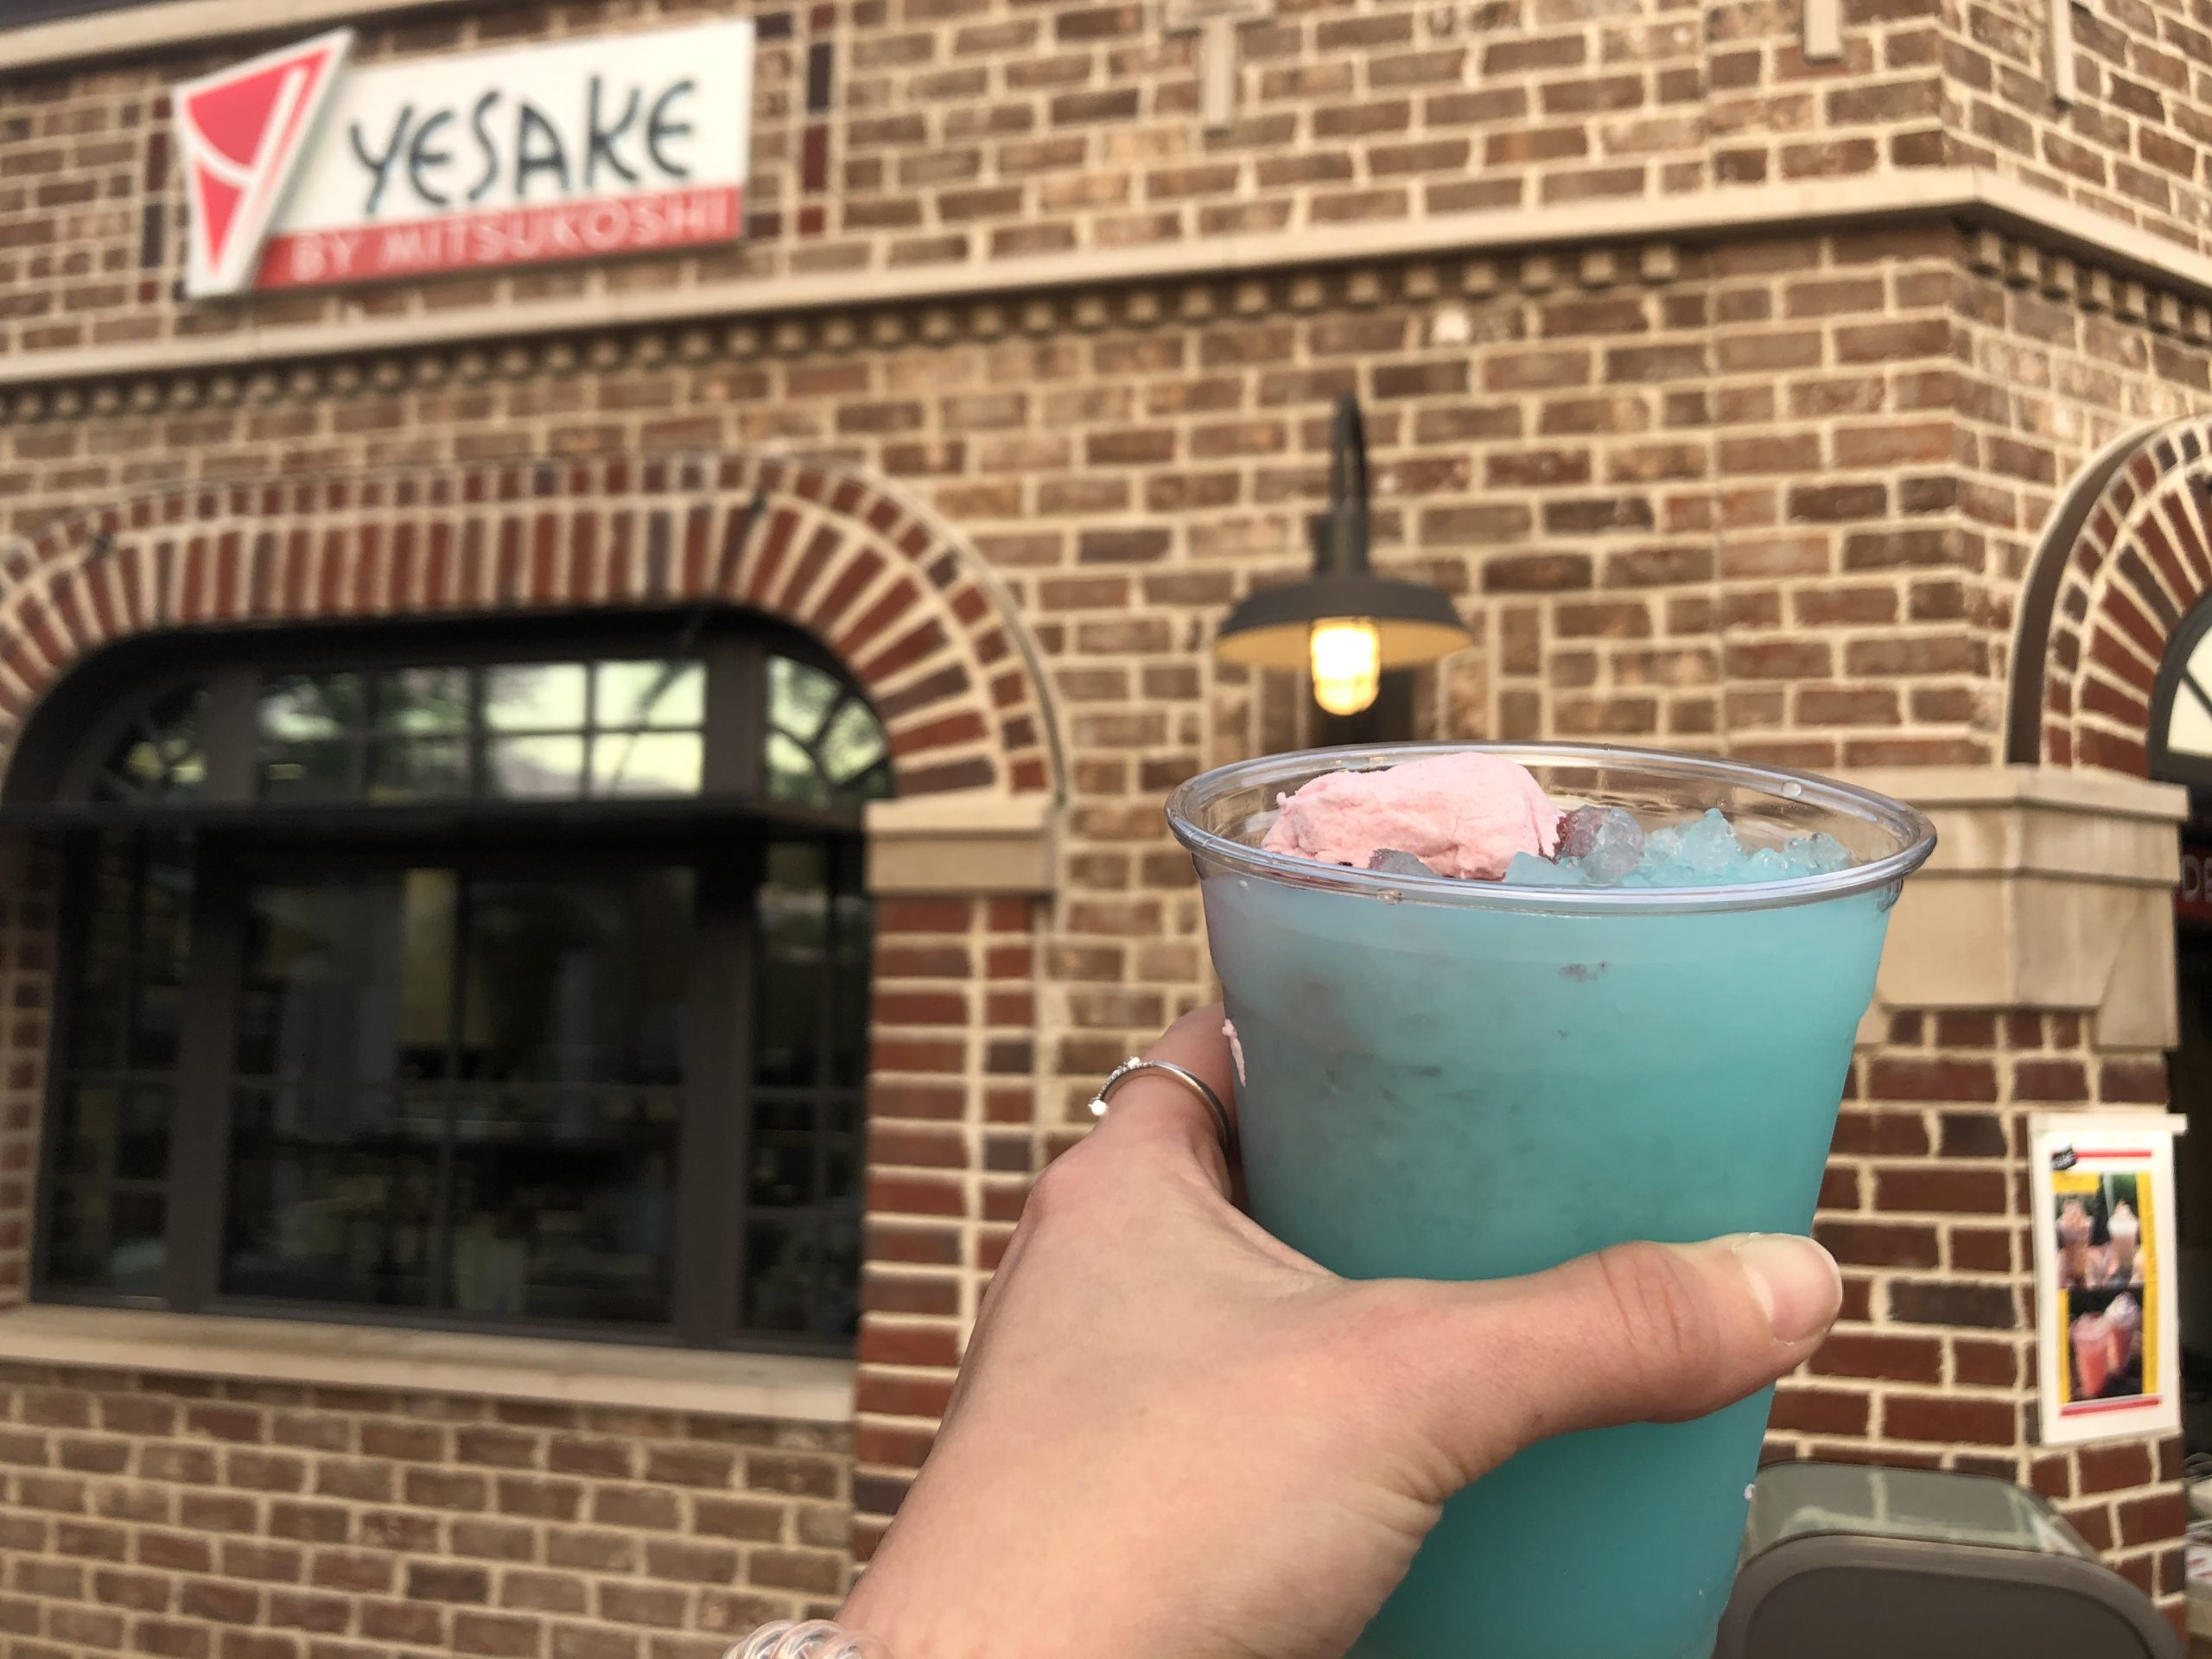 Disney Springs’ YeSake Serves Up Drinkable Cotton Candy